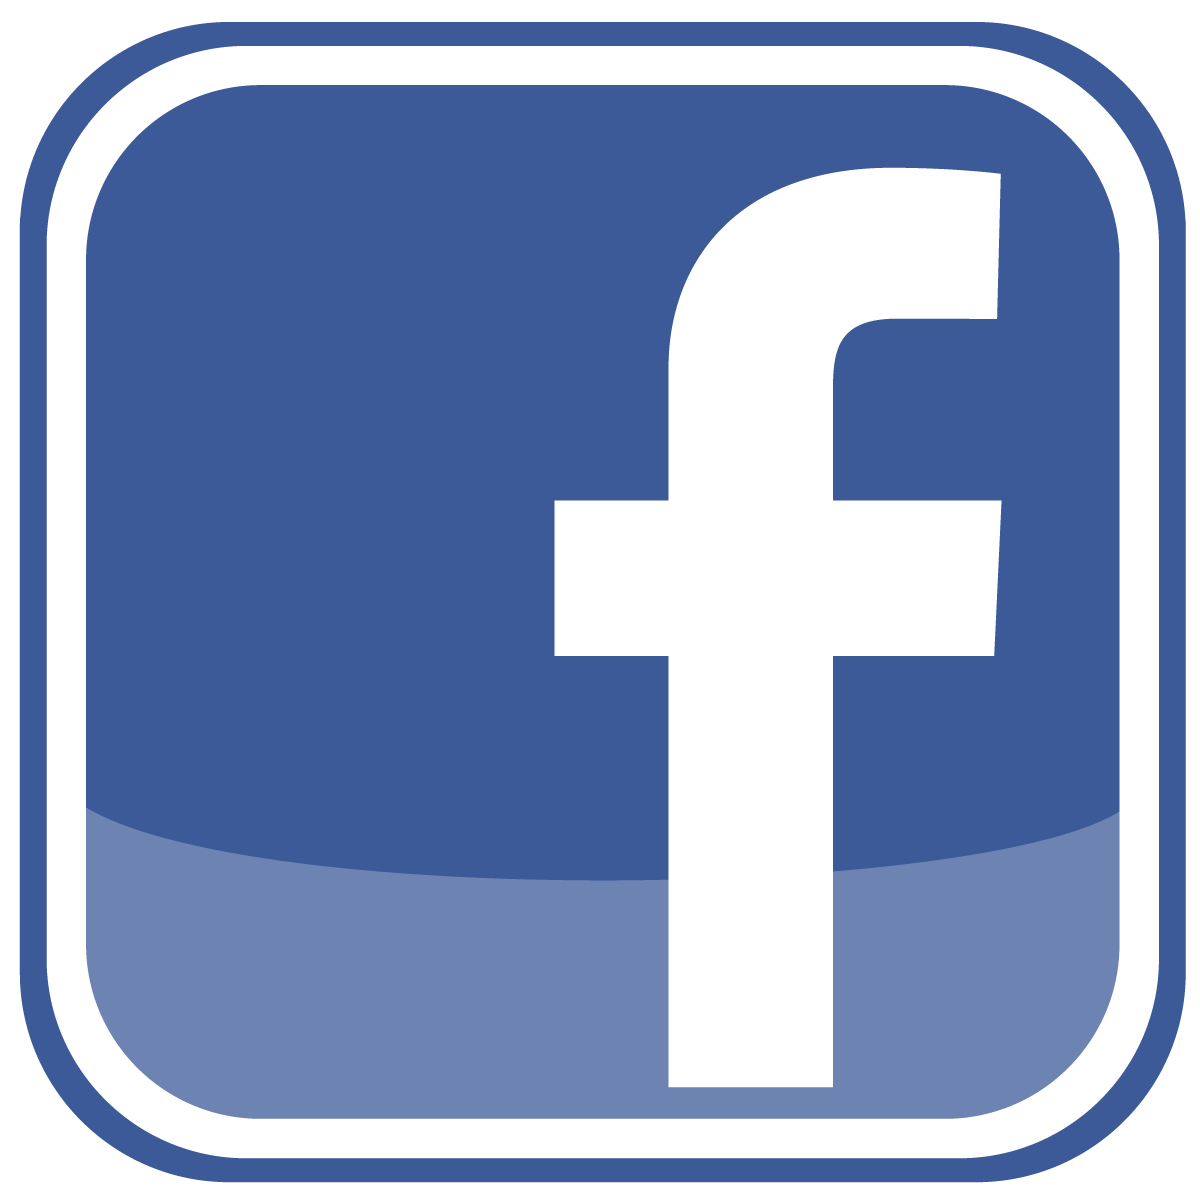 facebook-icon-5